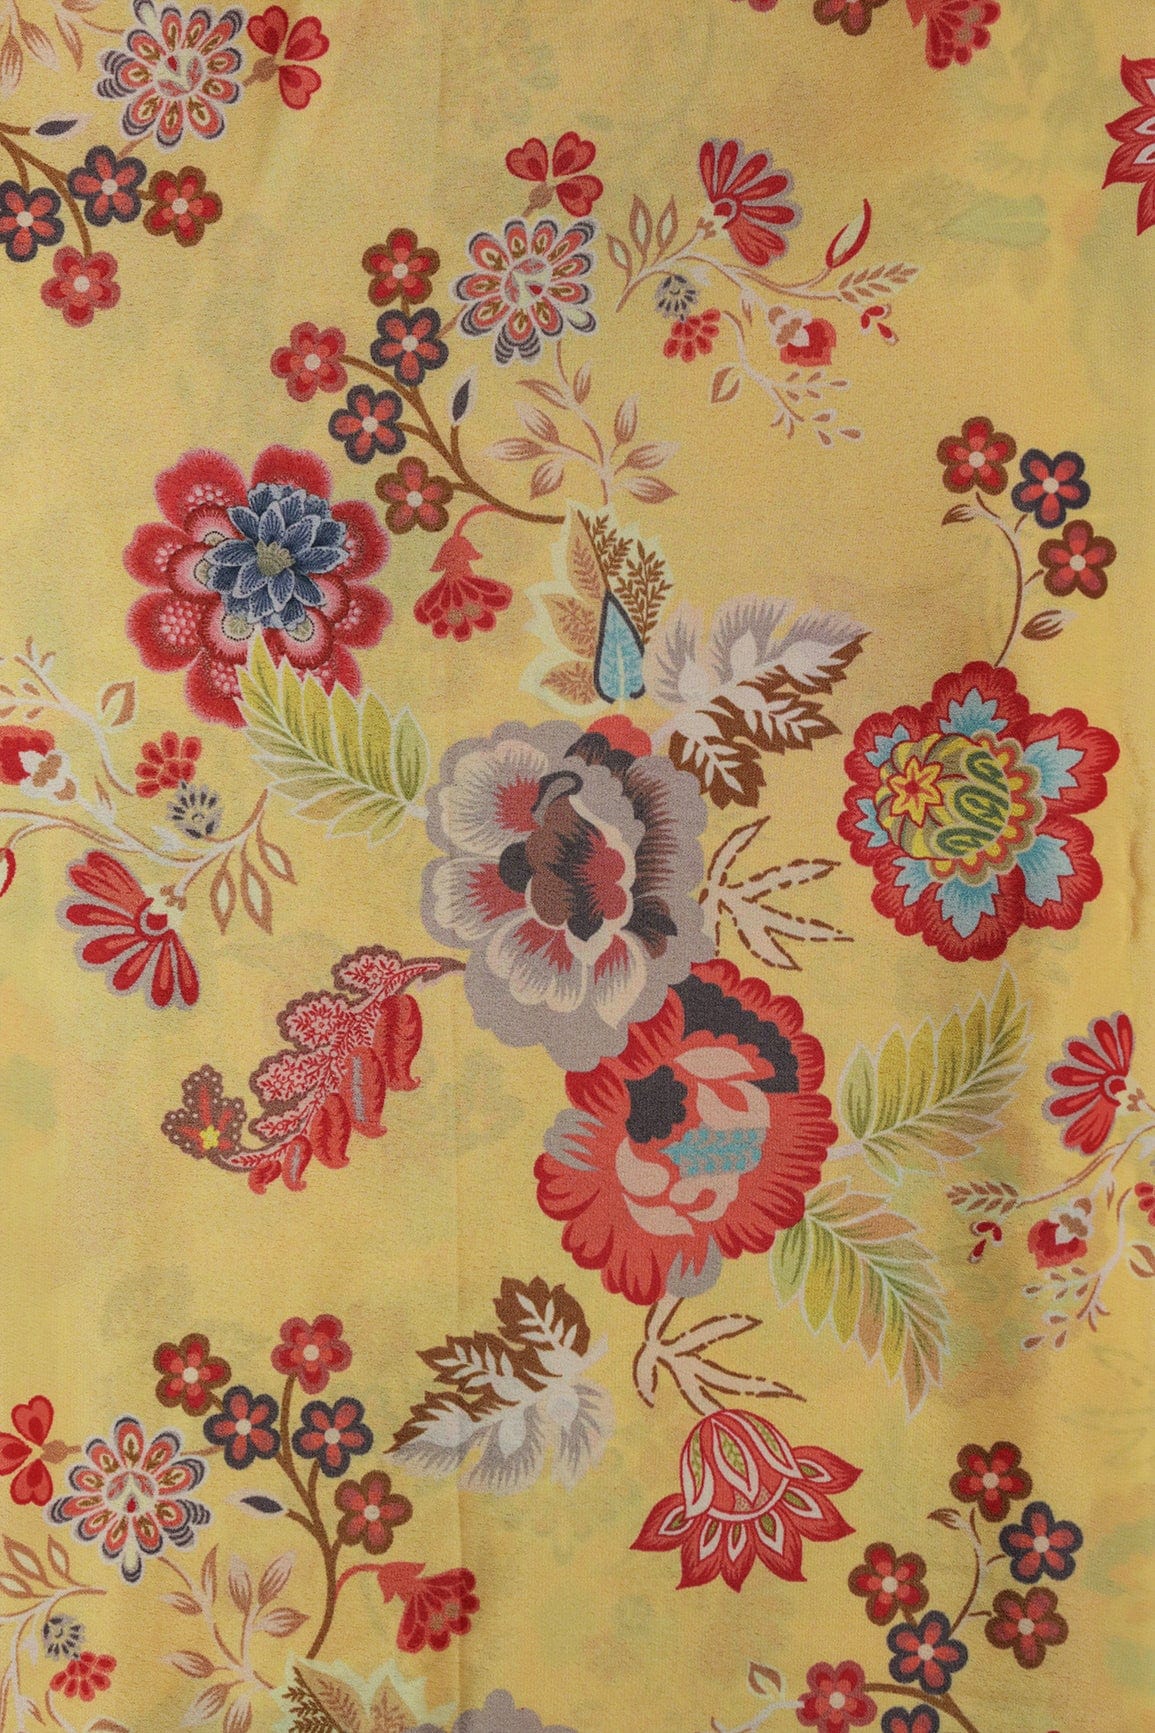 doeraa Prints Multi Color Floral Pattern Digital Print On Yellow Malai Crepe Fabric